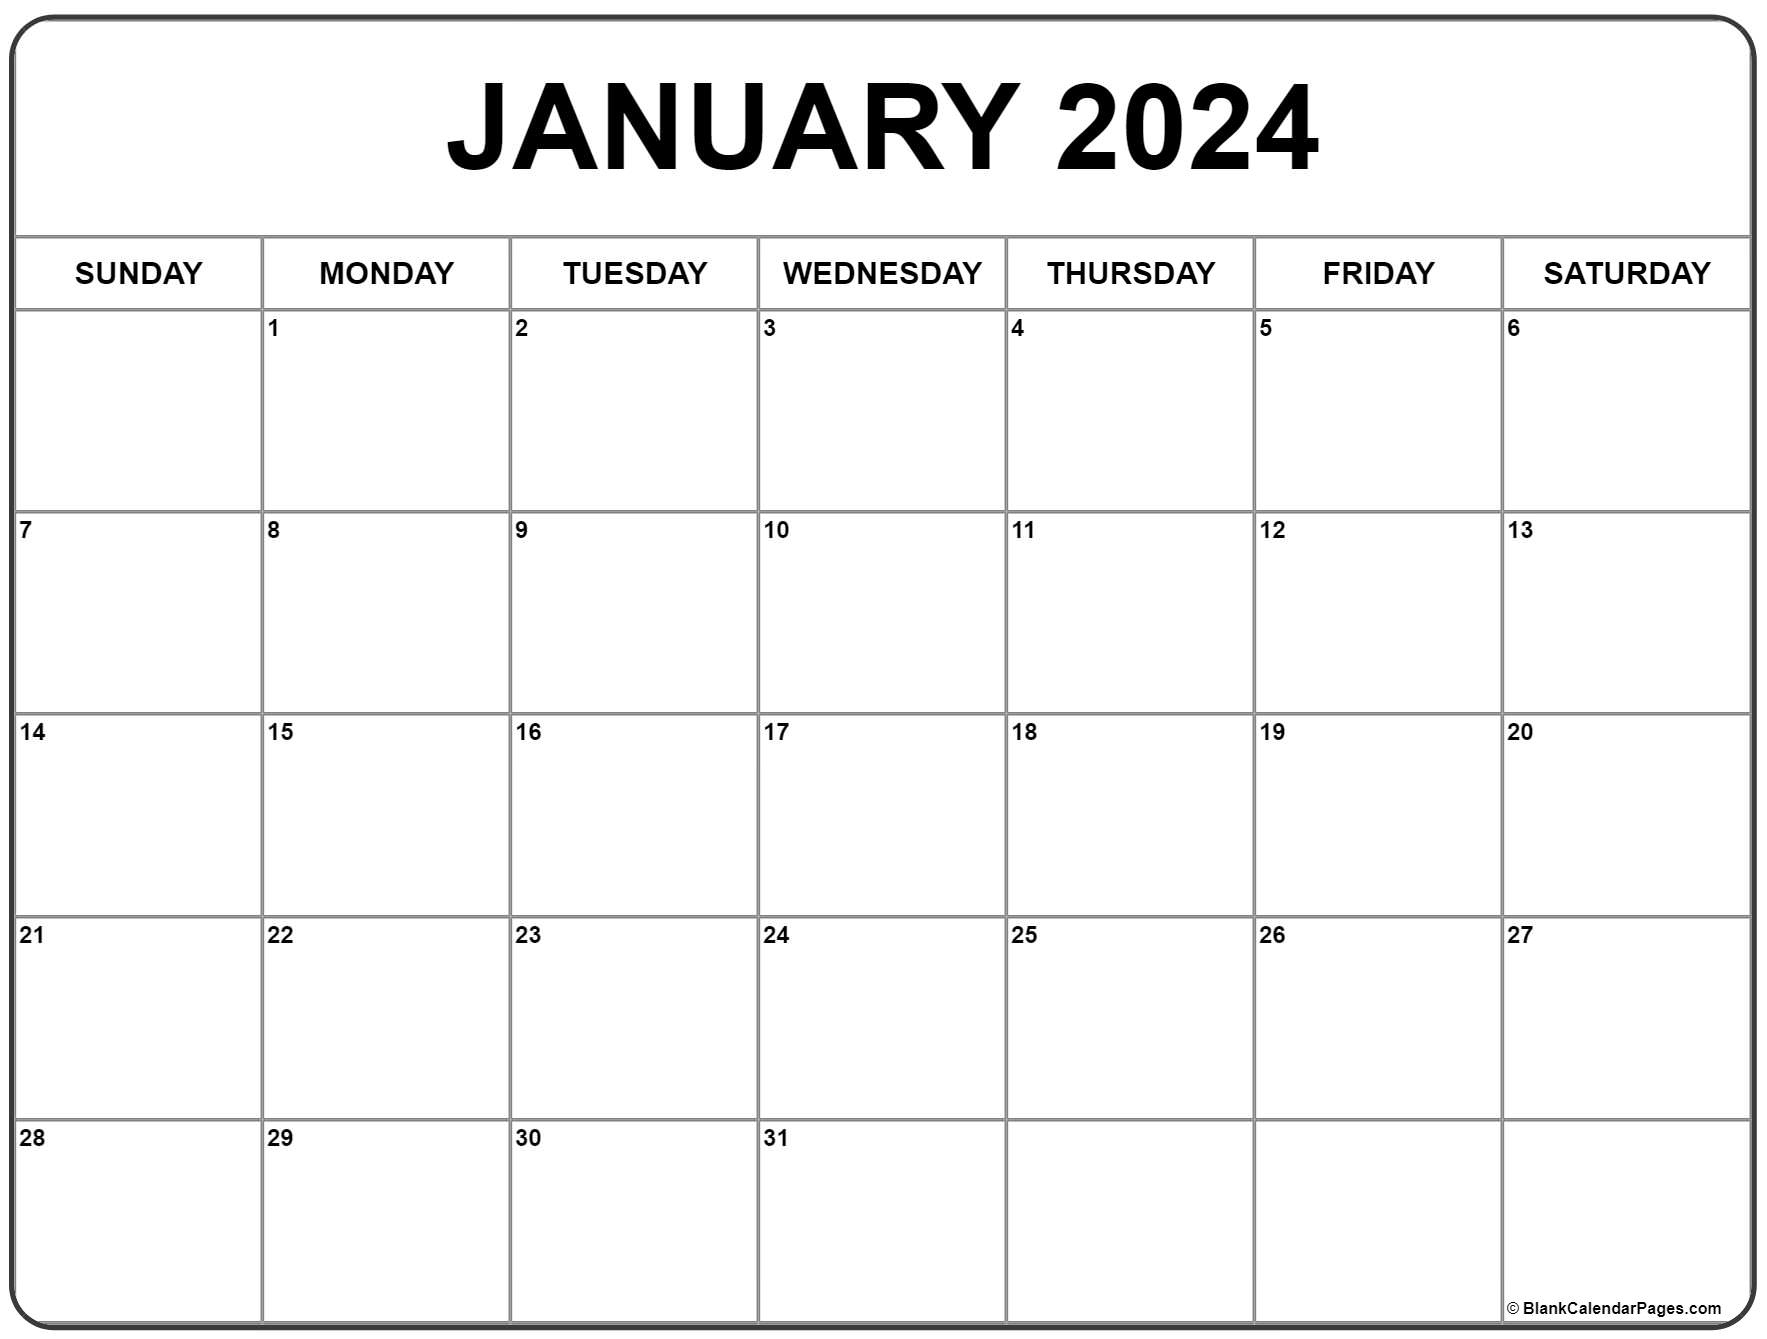 January 2024 Calendar | Free Printable Calendar | Free Printable Monthly Calendar 2024